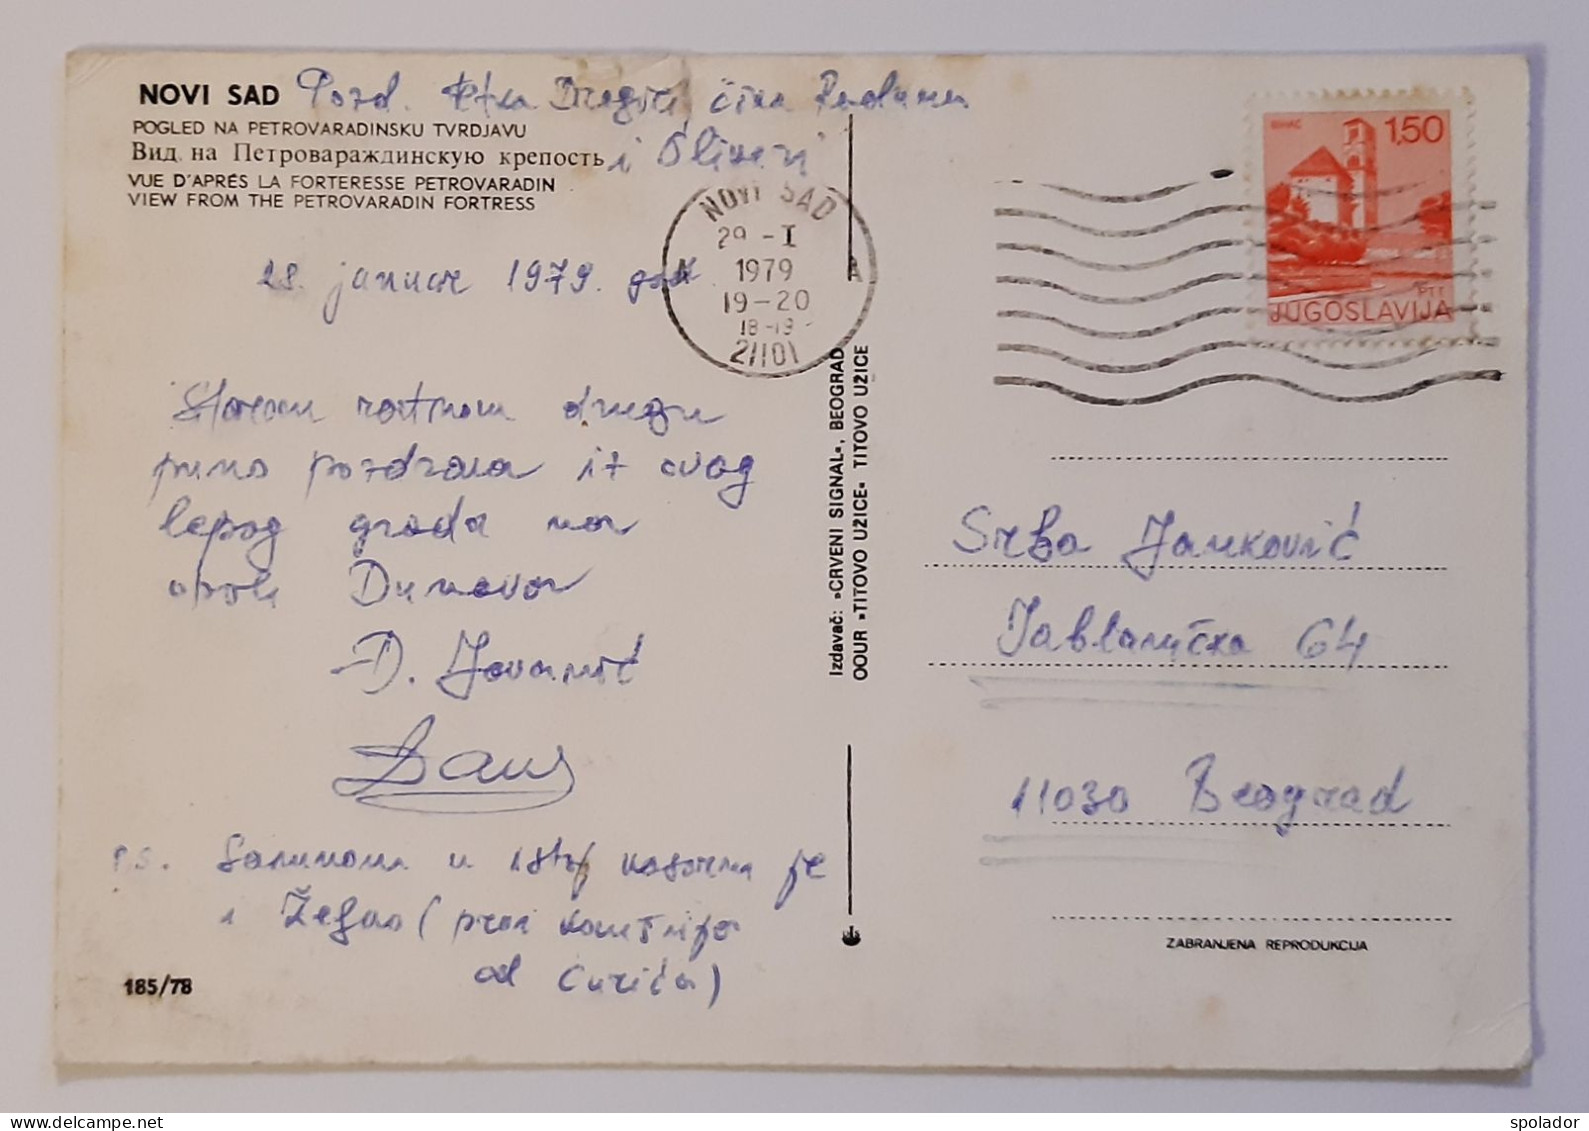 NOVI SAD-Ex-Yugoslavia-Vintage Postcard-Serbia-View From The Petrovaradin Fortress-1979-used With Stamp - Yougoslavie